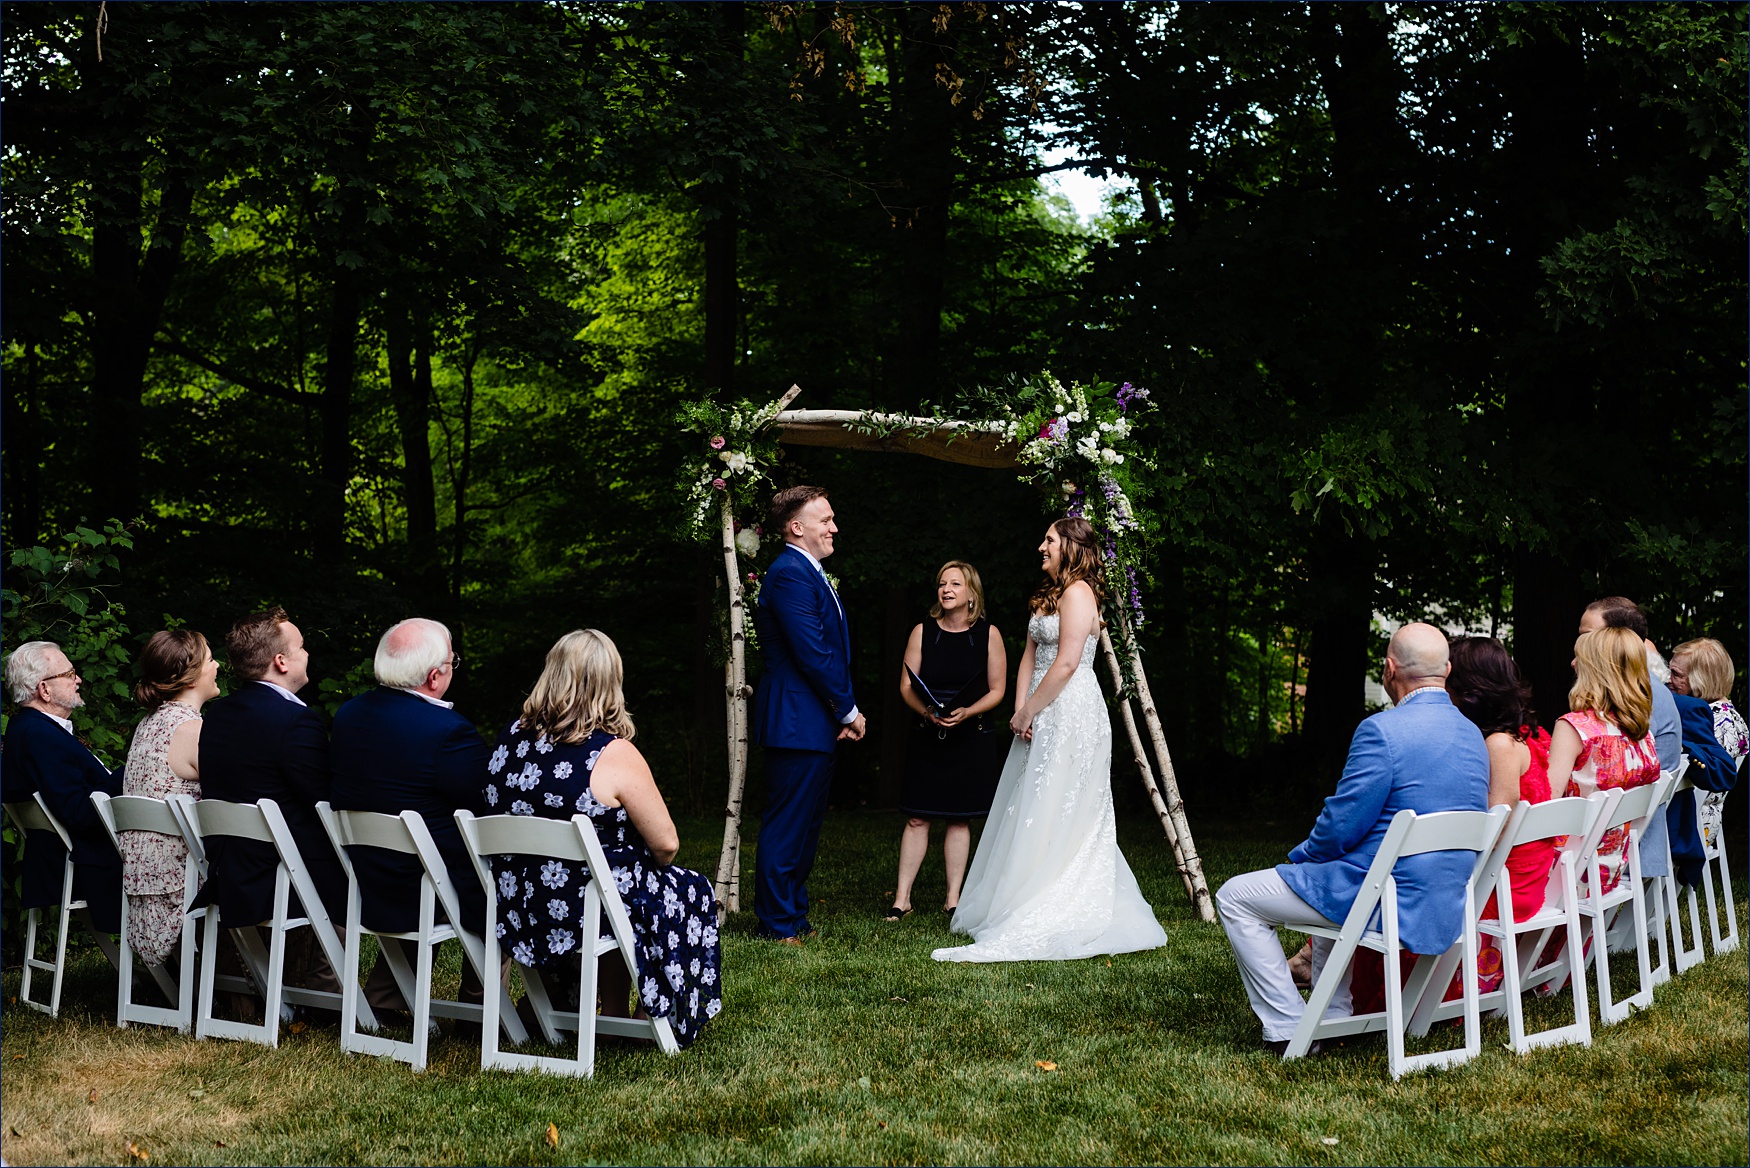 The intimate backyard wedding ceremony in the midst of coronavirus world